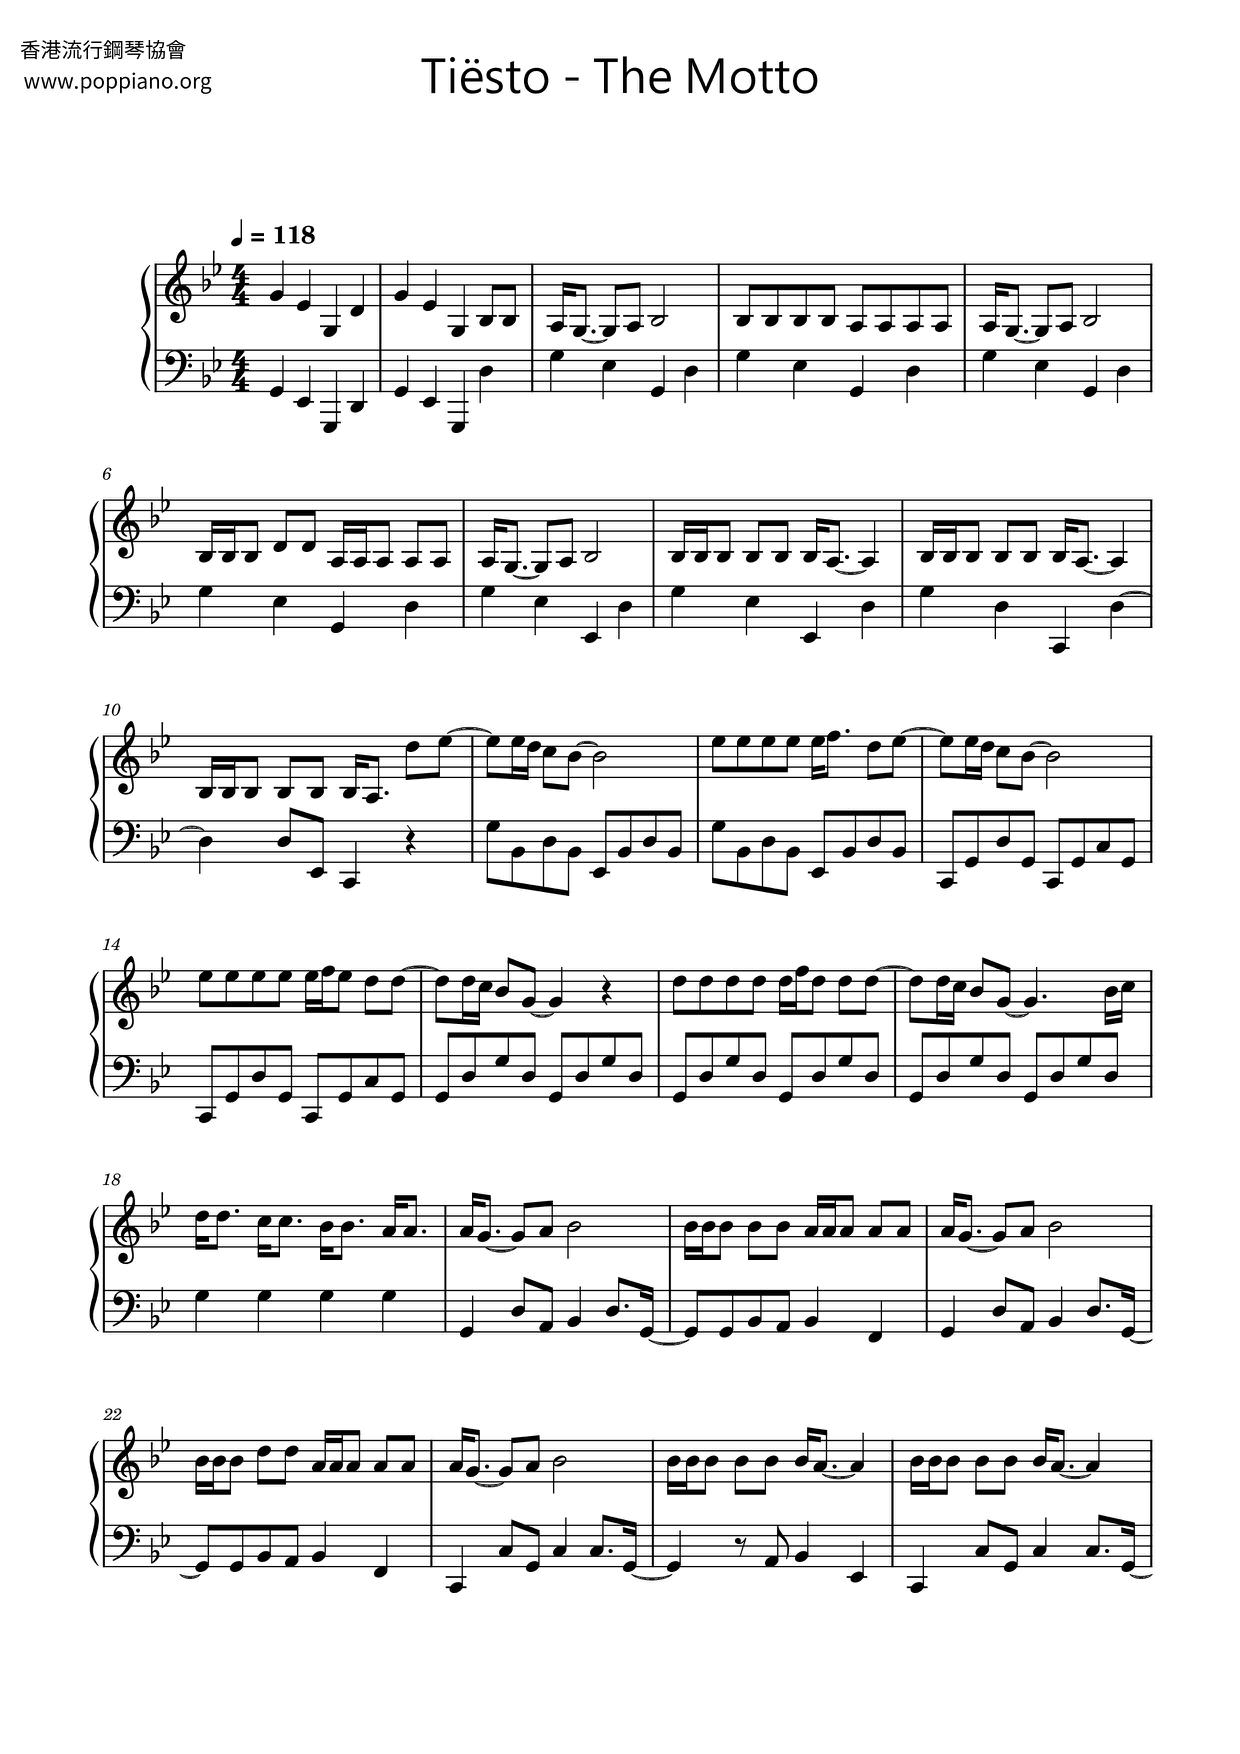 The Mottoピアノ譜